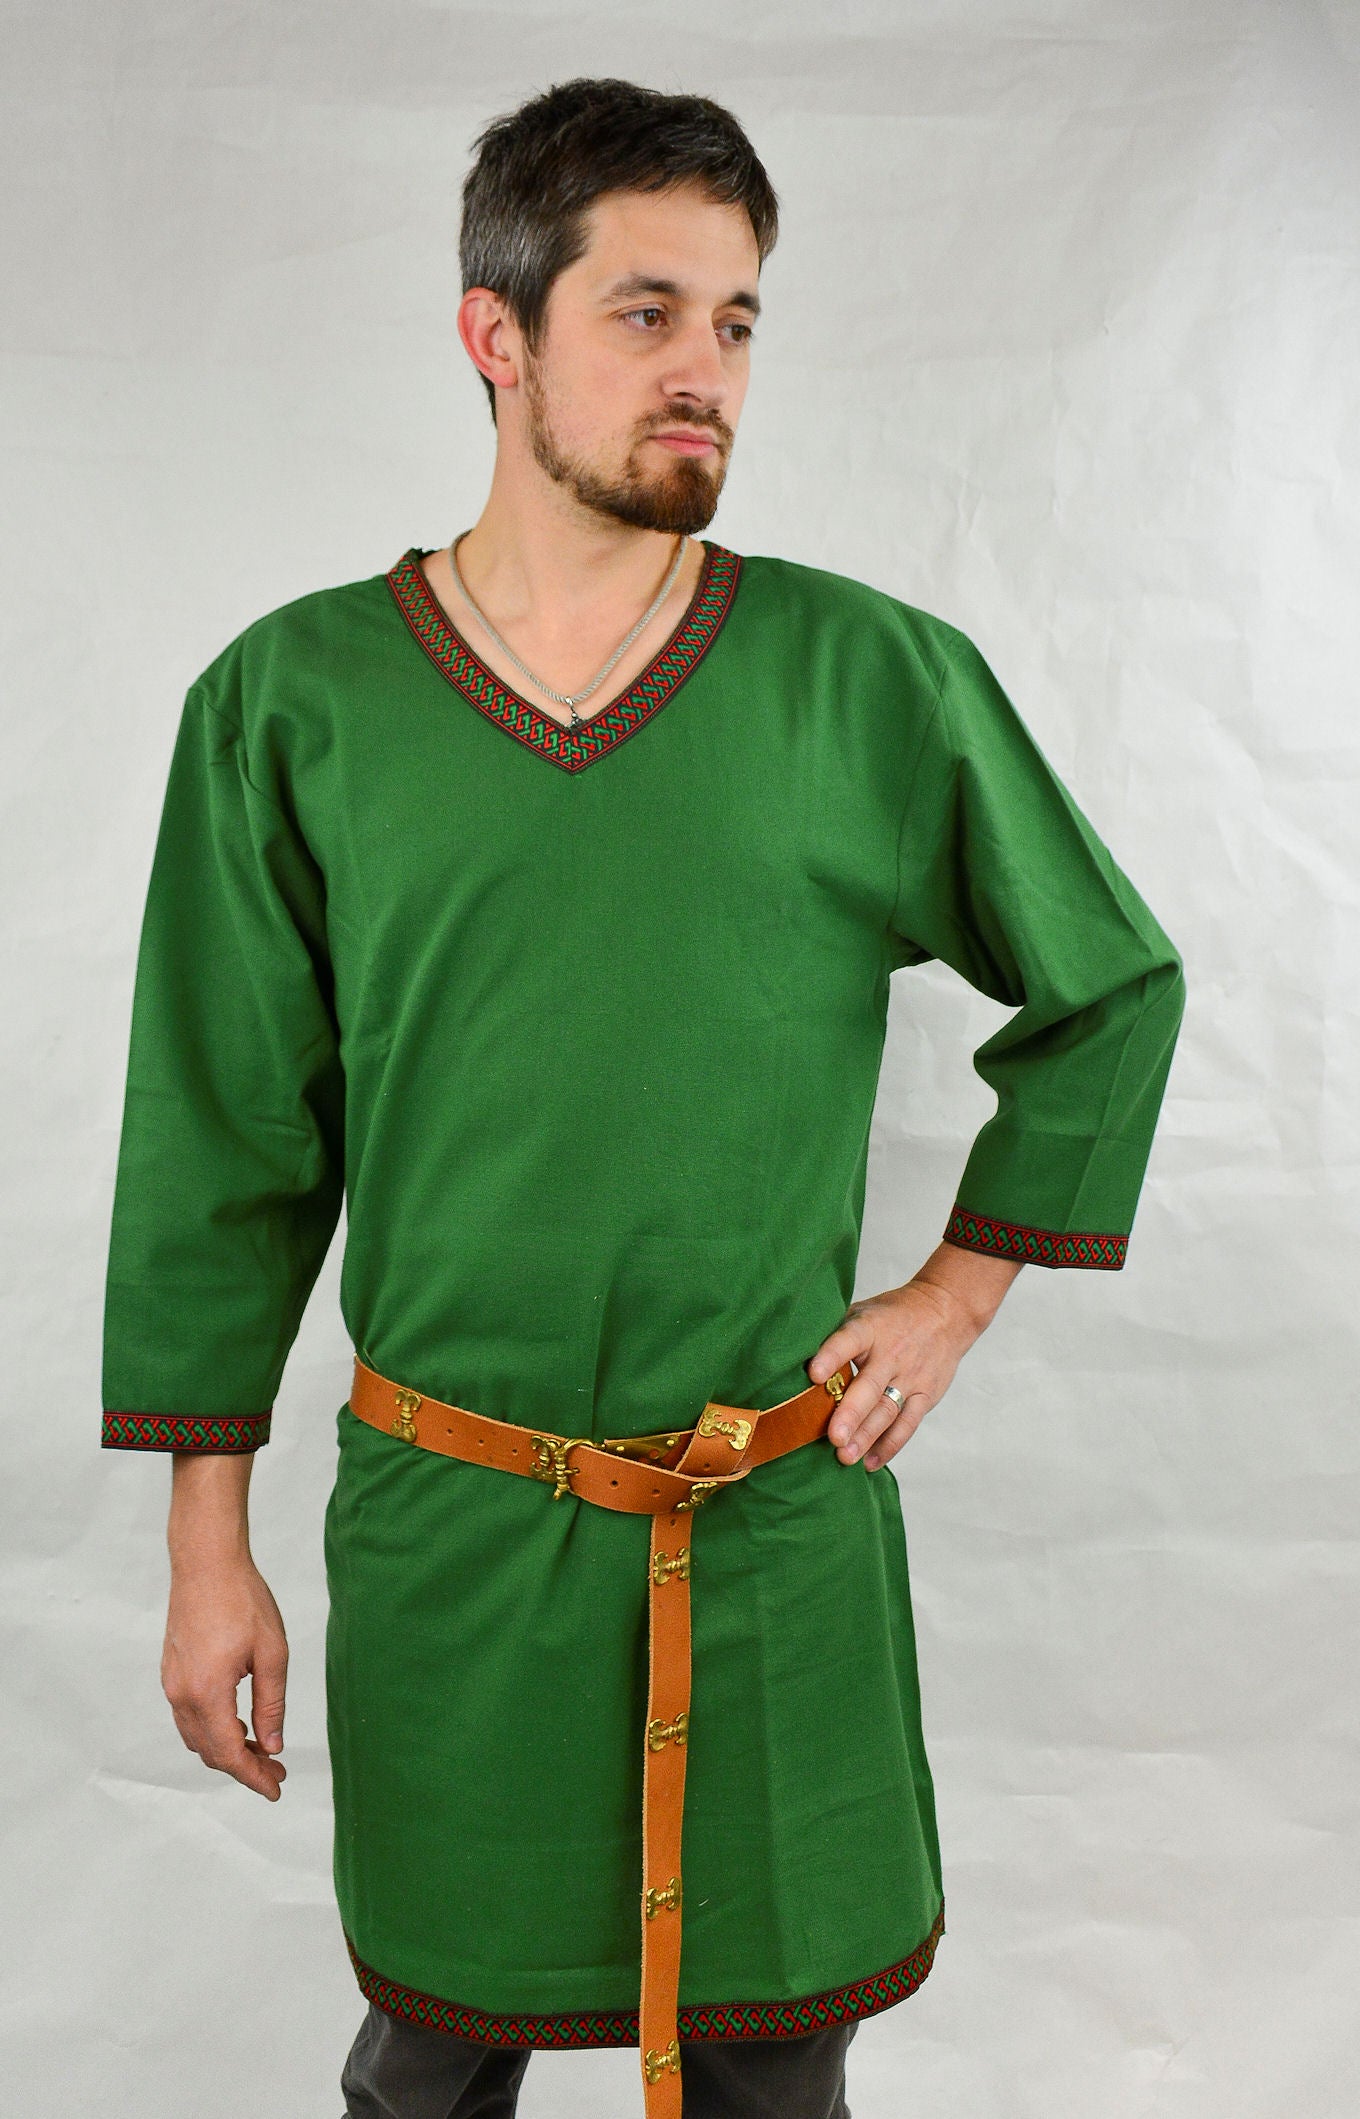 male model wearing a green Viking Tunic